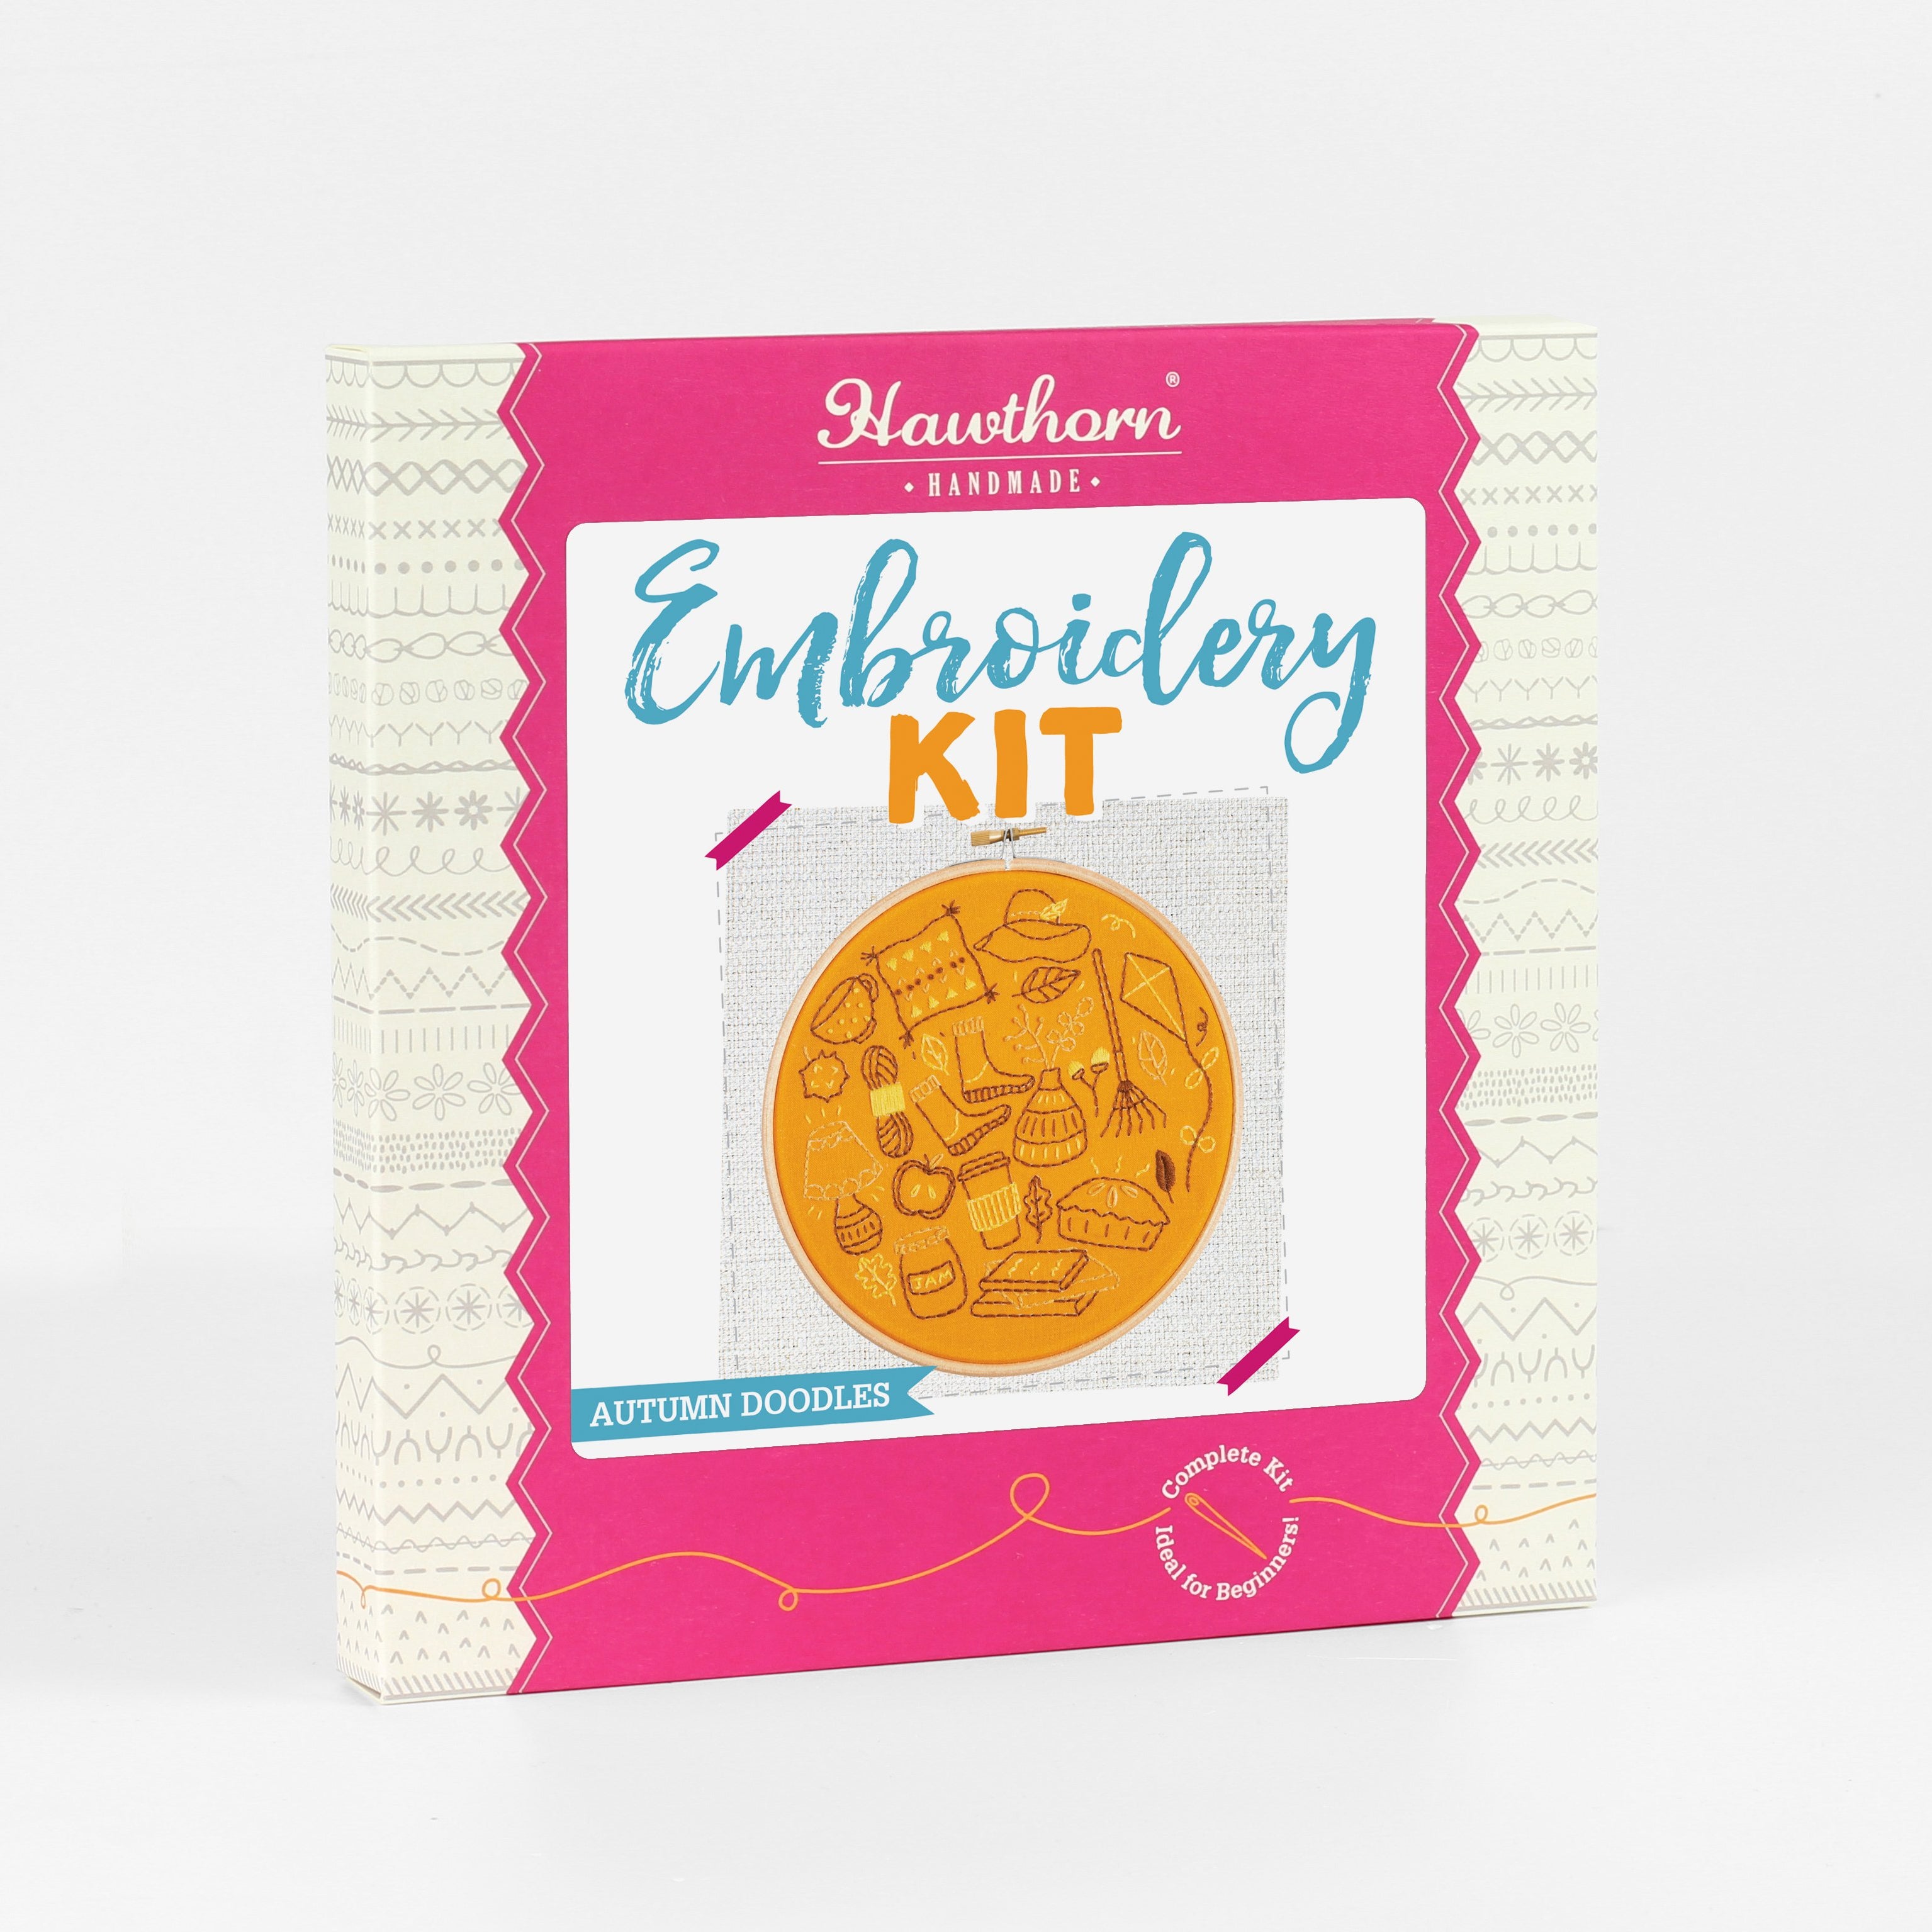 Autumn Doodles Embroidery Kit Box.